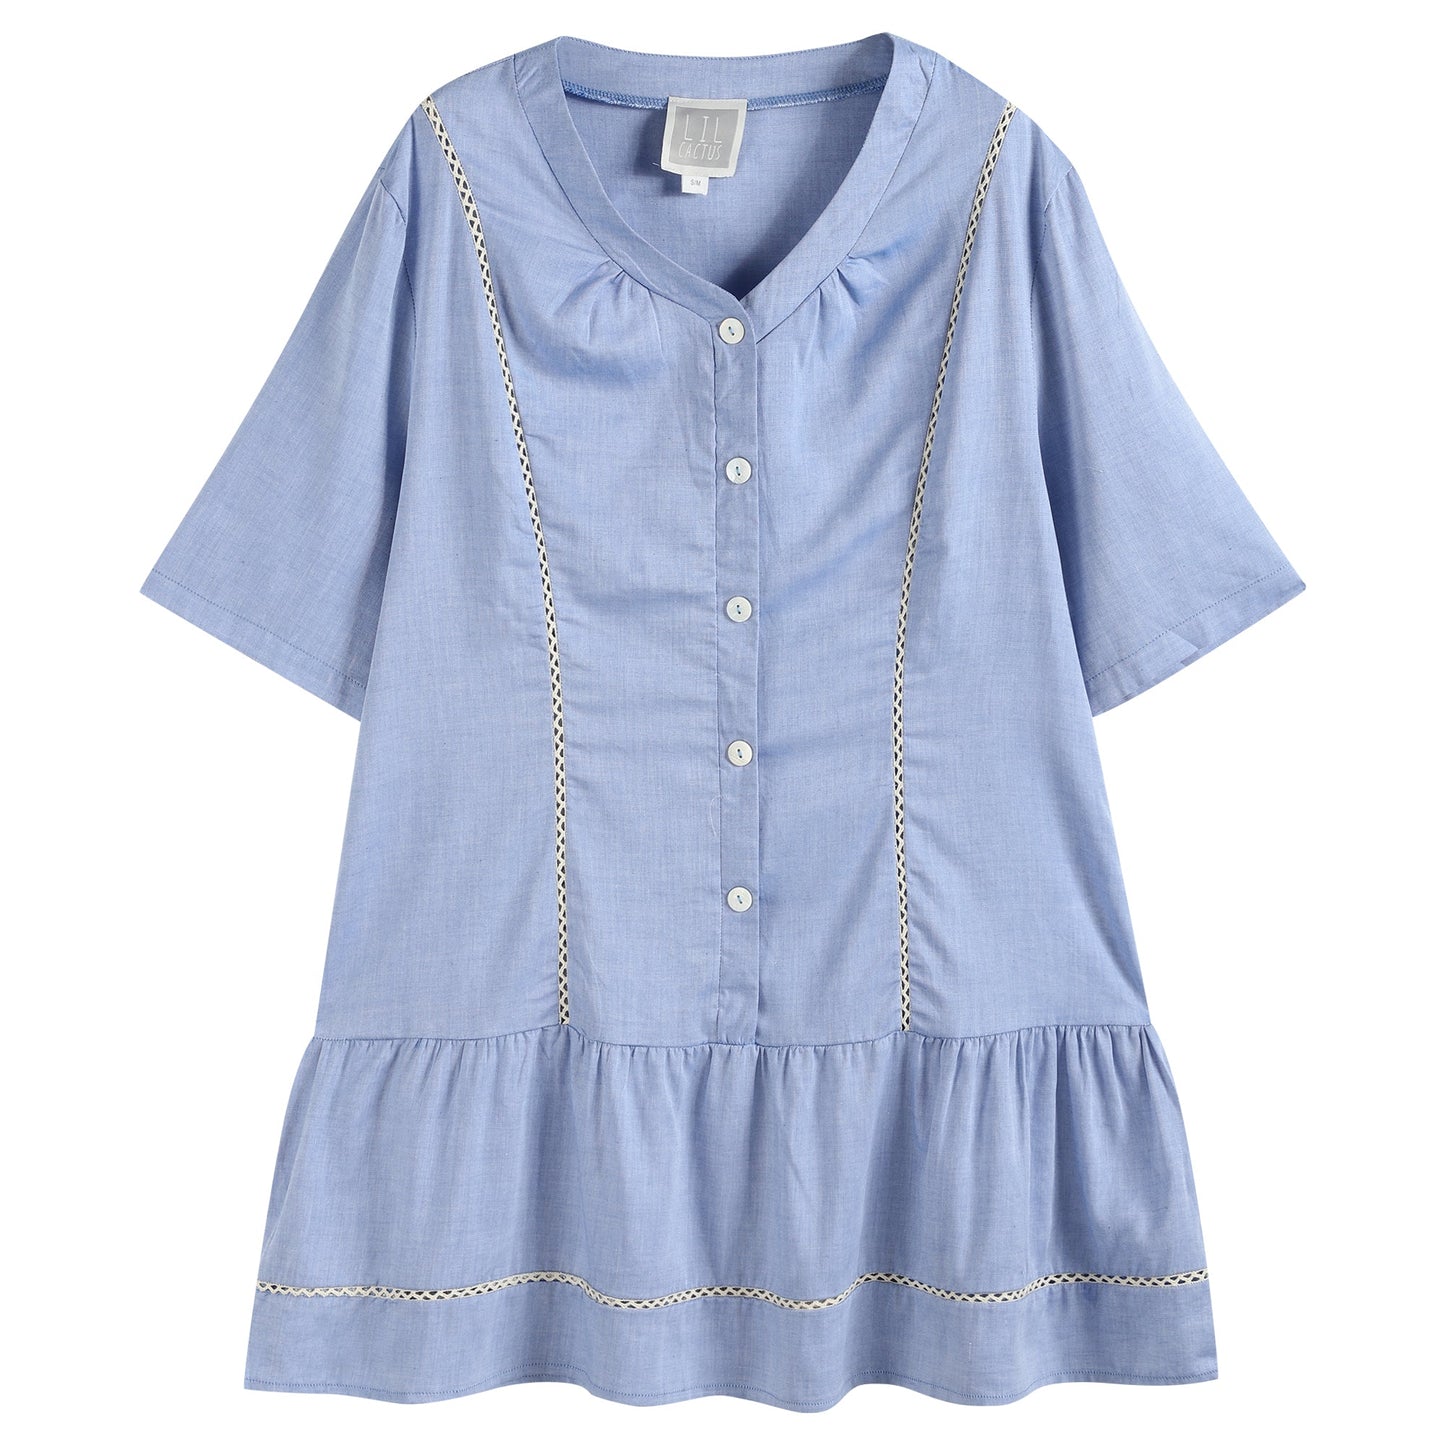 Ladies Light Blue Cotton Ruffle Embroidery Dress